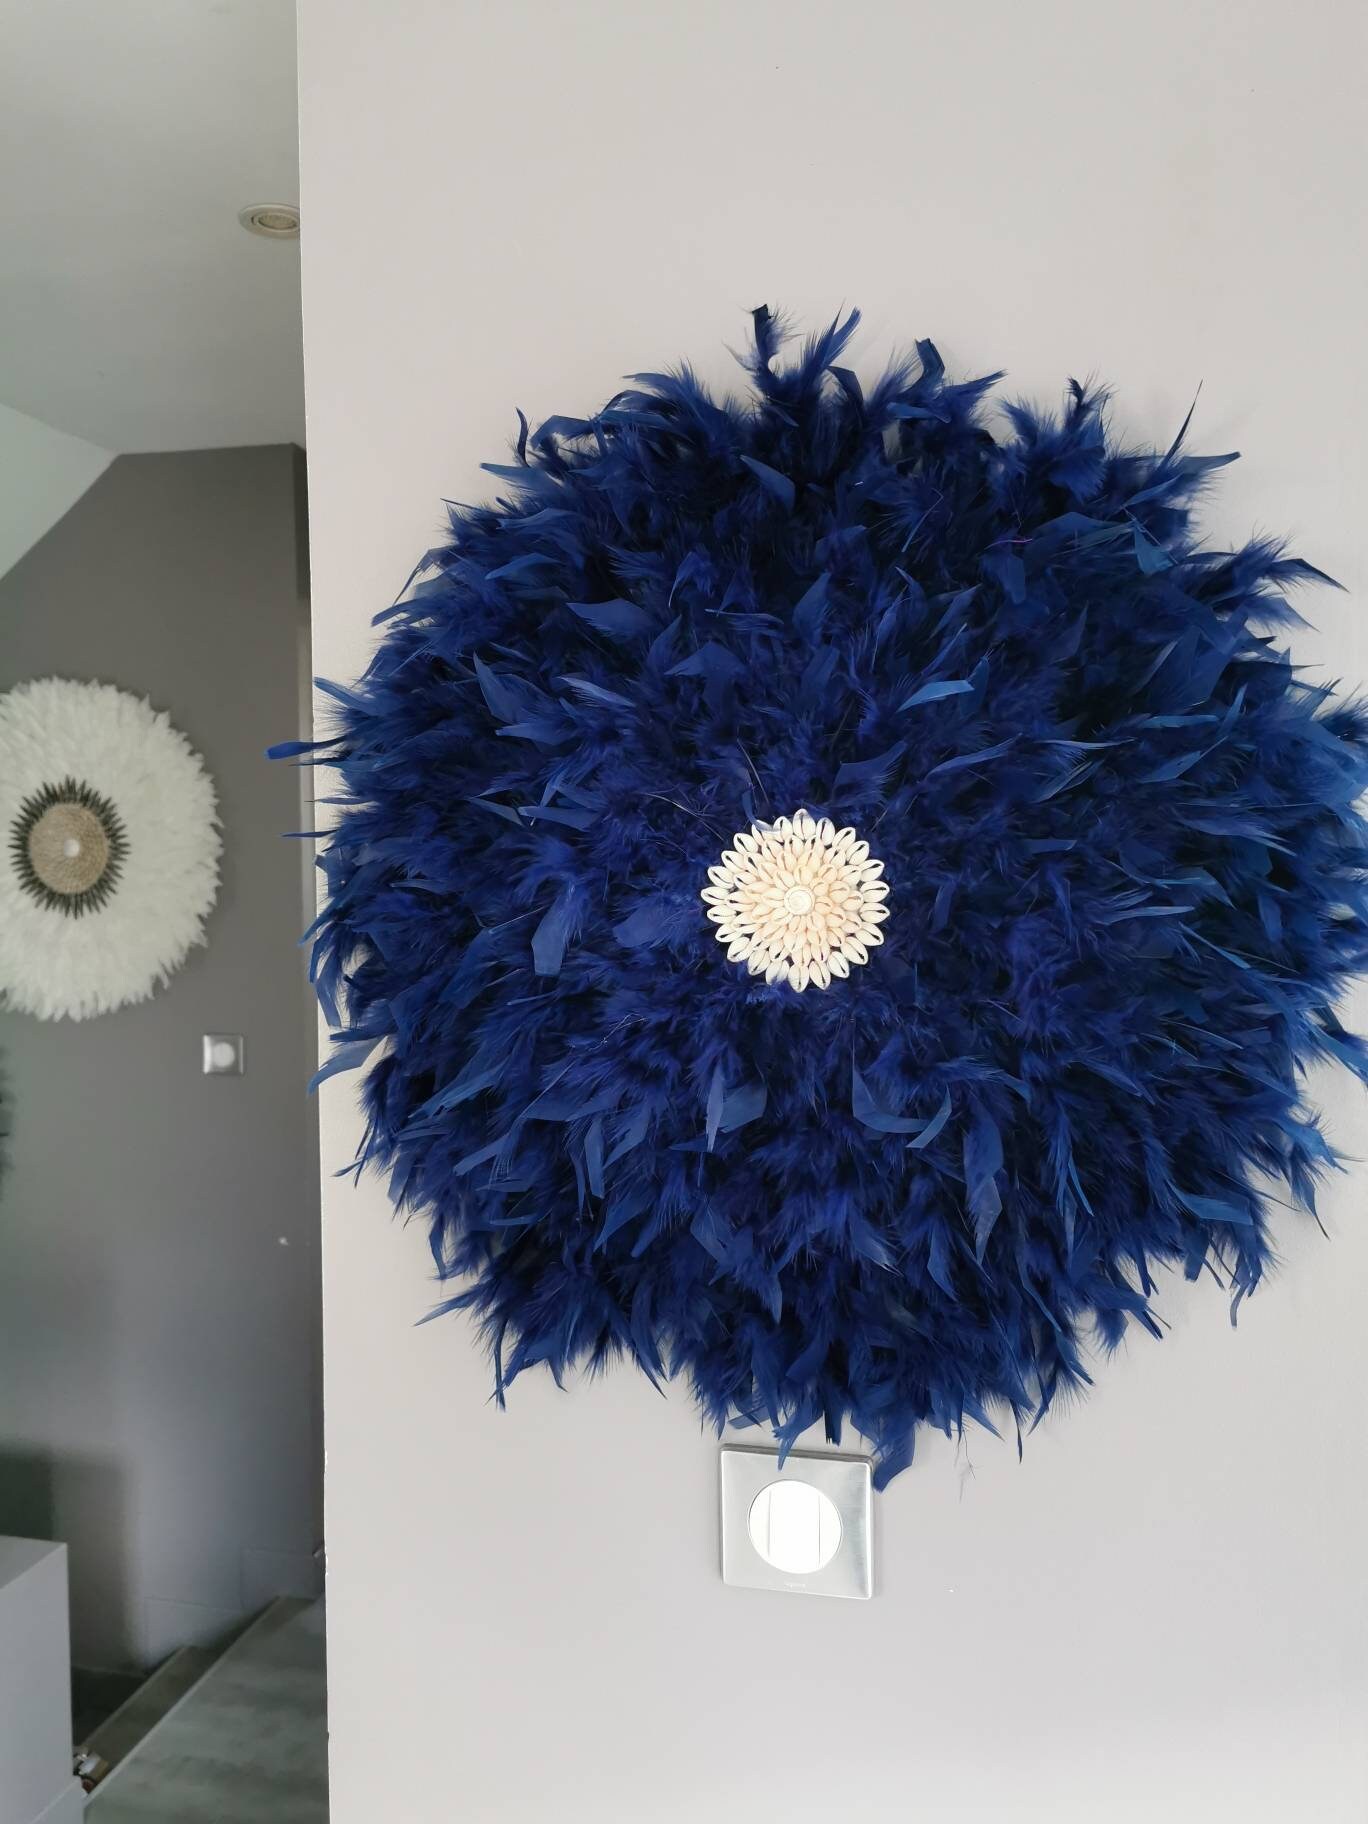 Taille L Jujuhat/Juju Hat Handmade en Plumes Naturelles 45/50 cm de Diamètre - Coloris Bleu Marine N